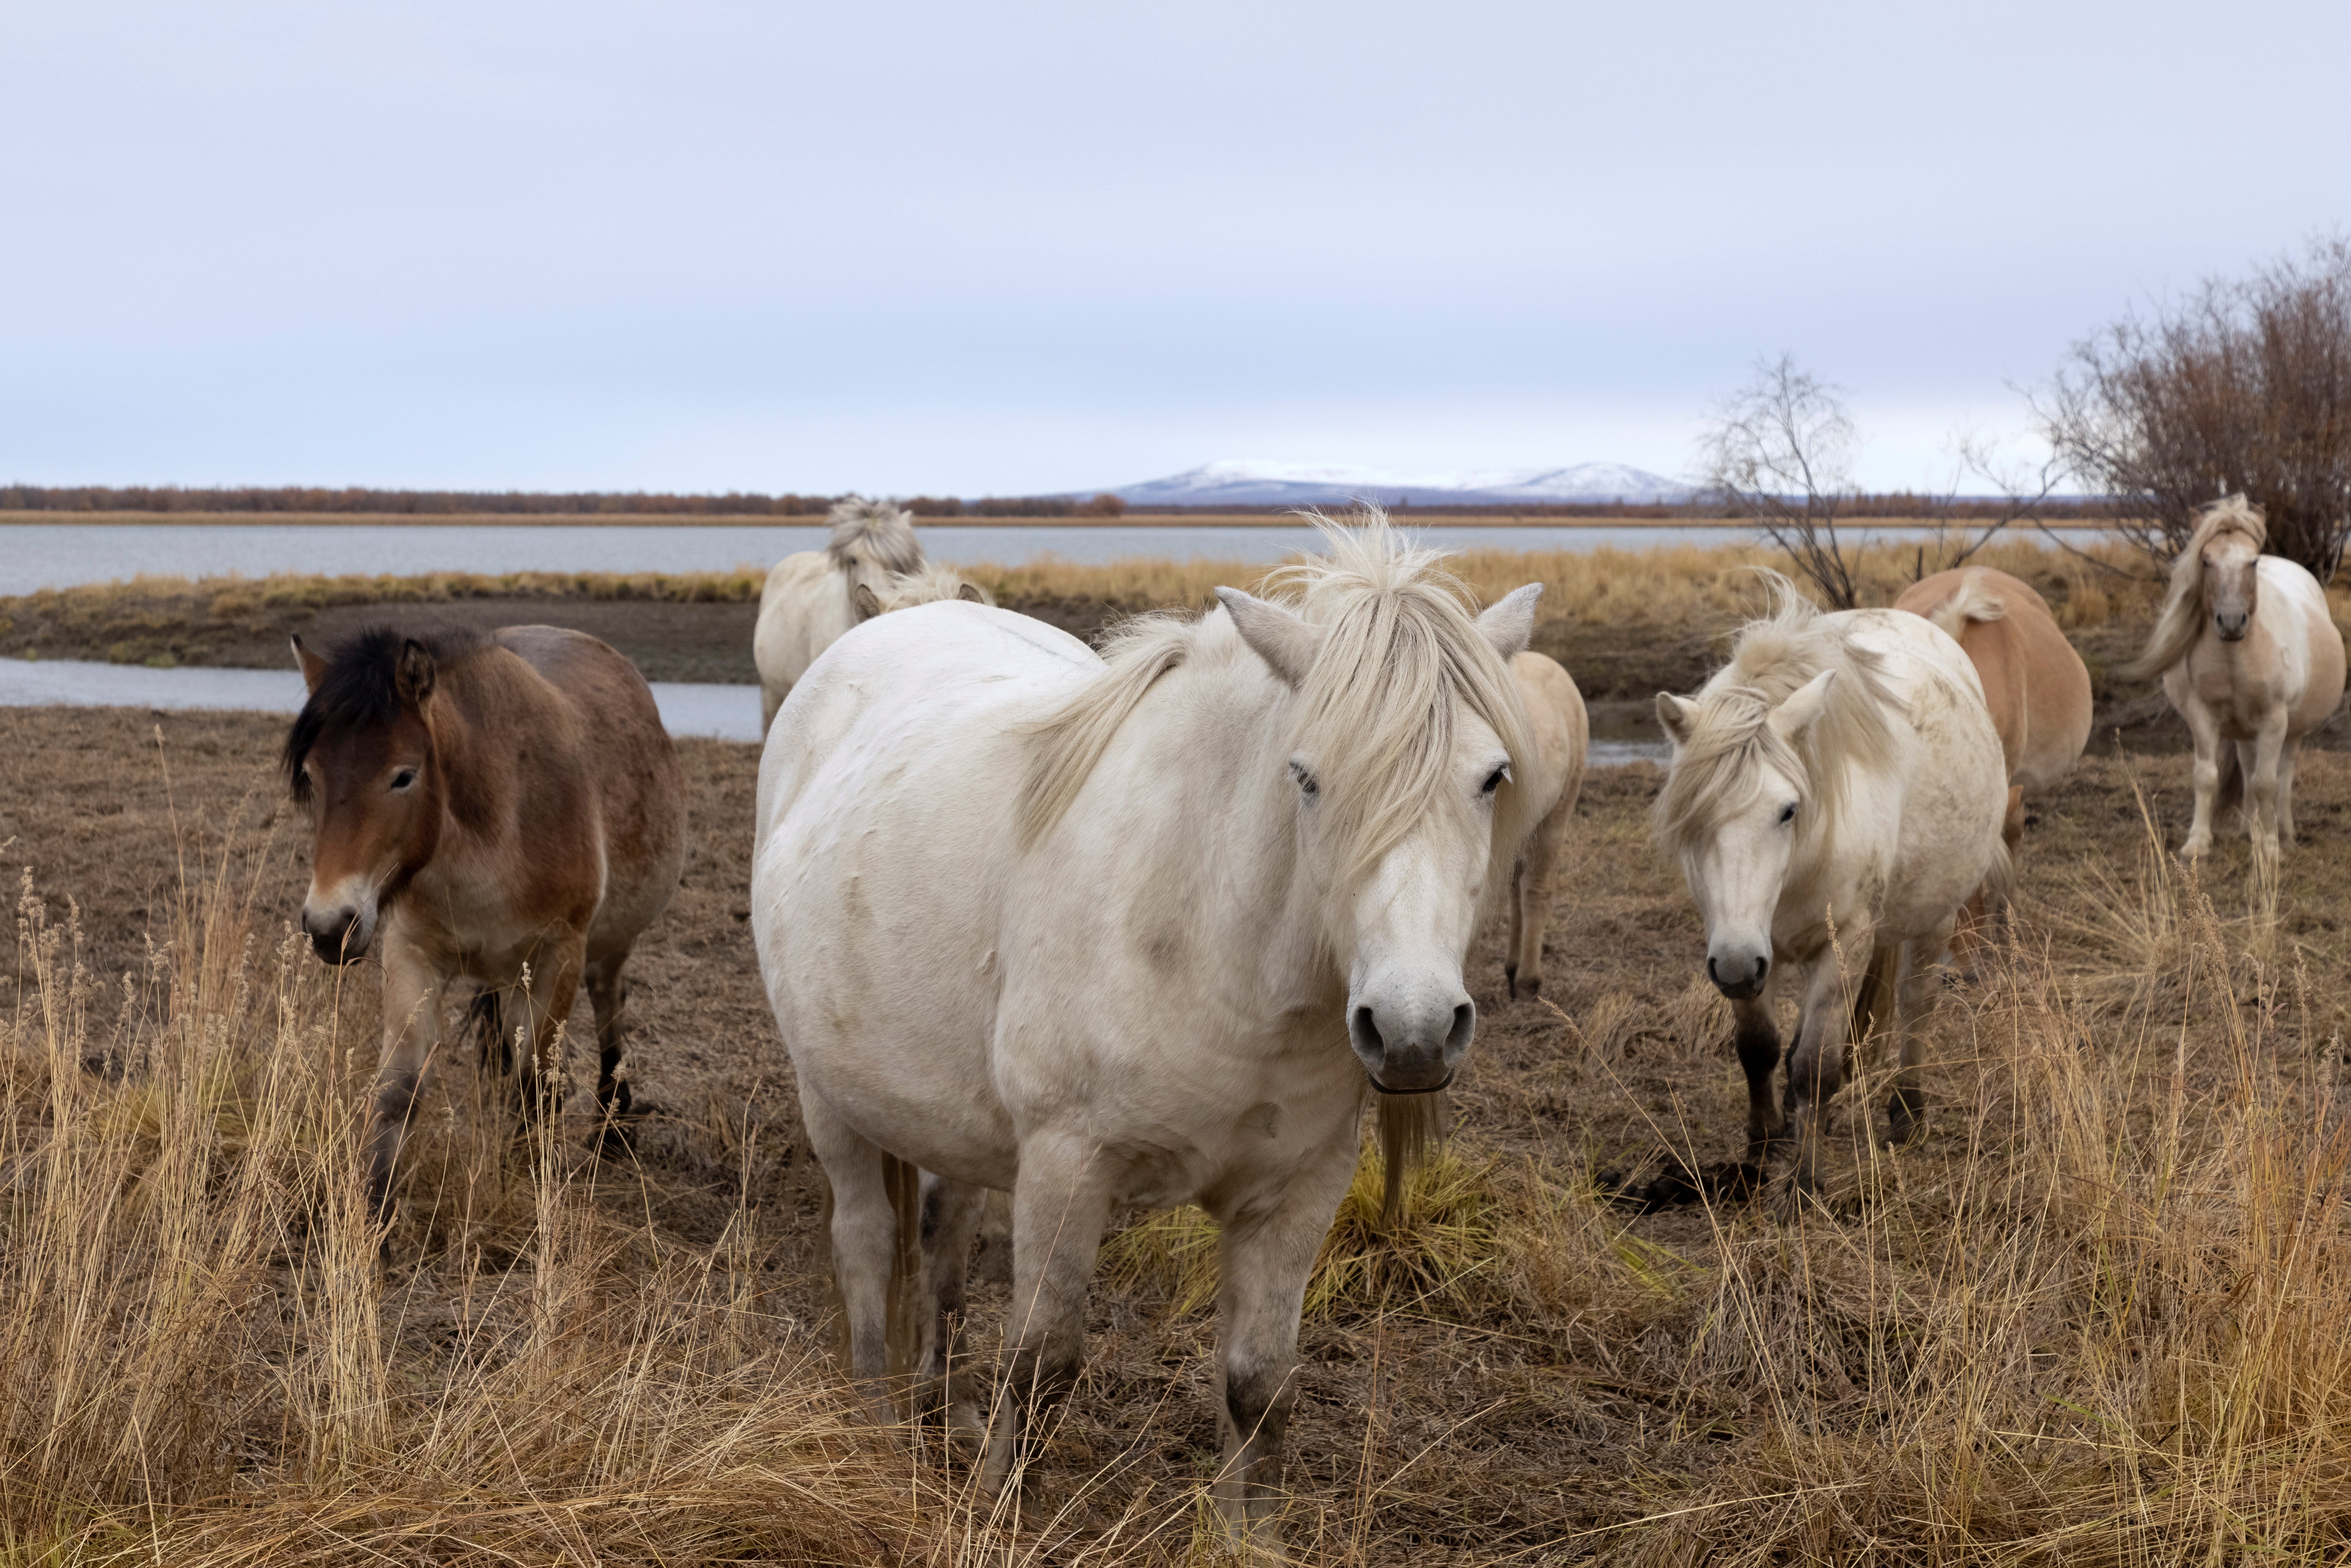 Horses graze on the grounds of the Pleistocene Park